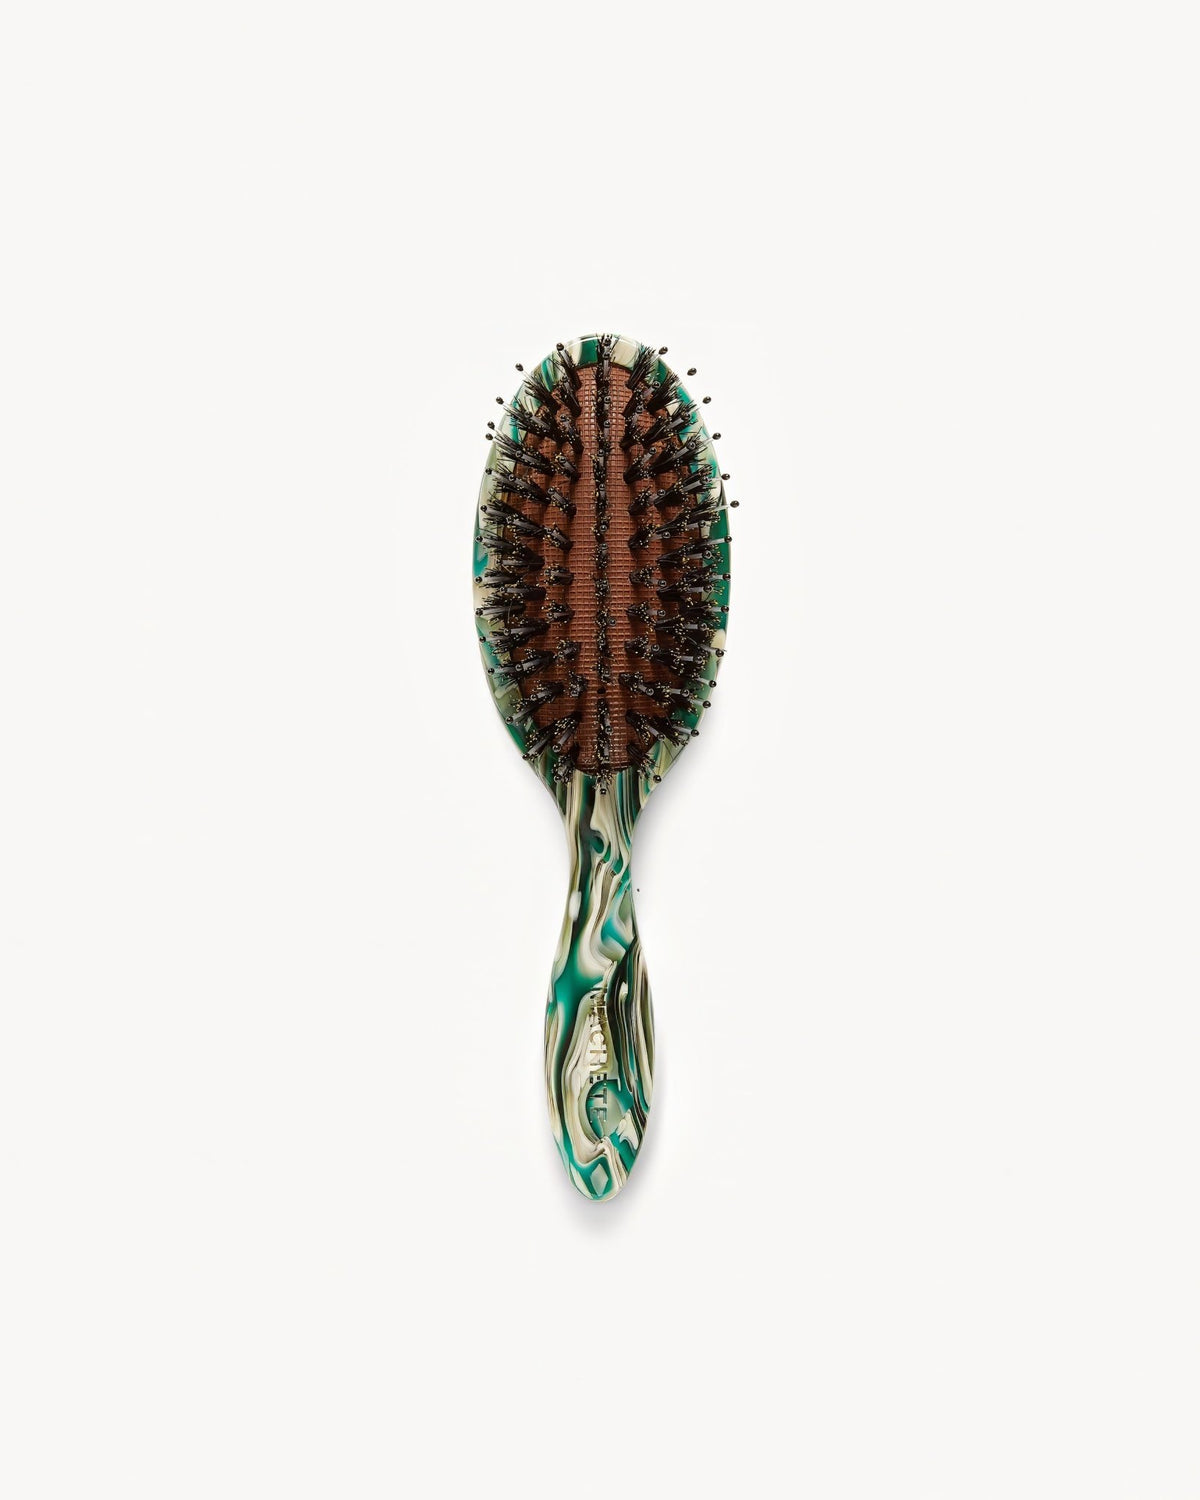 MACHETE Petite Travel Hair Brush in Stromanthe